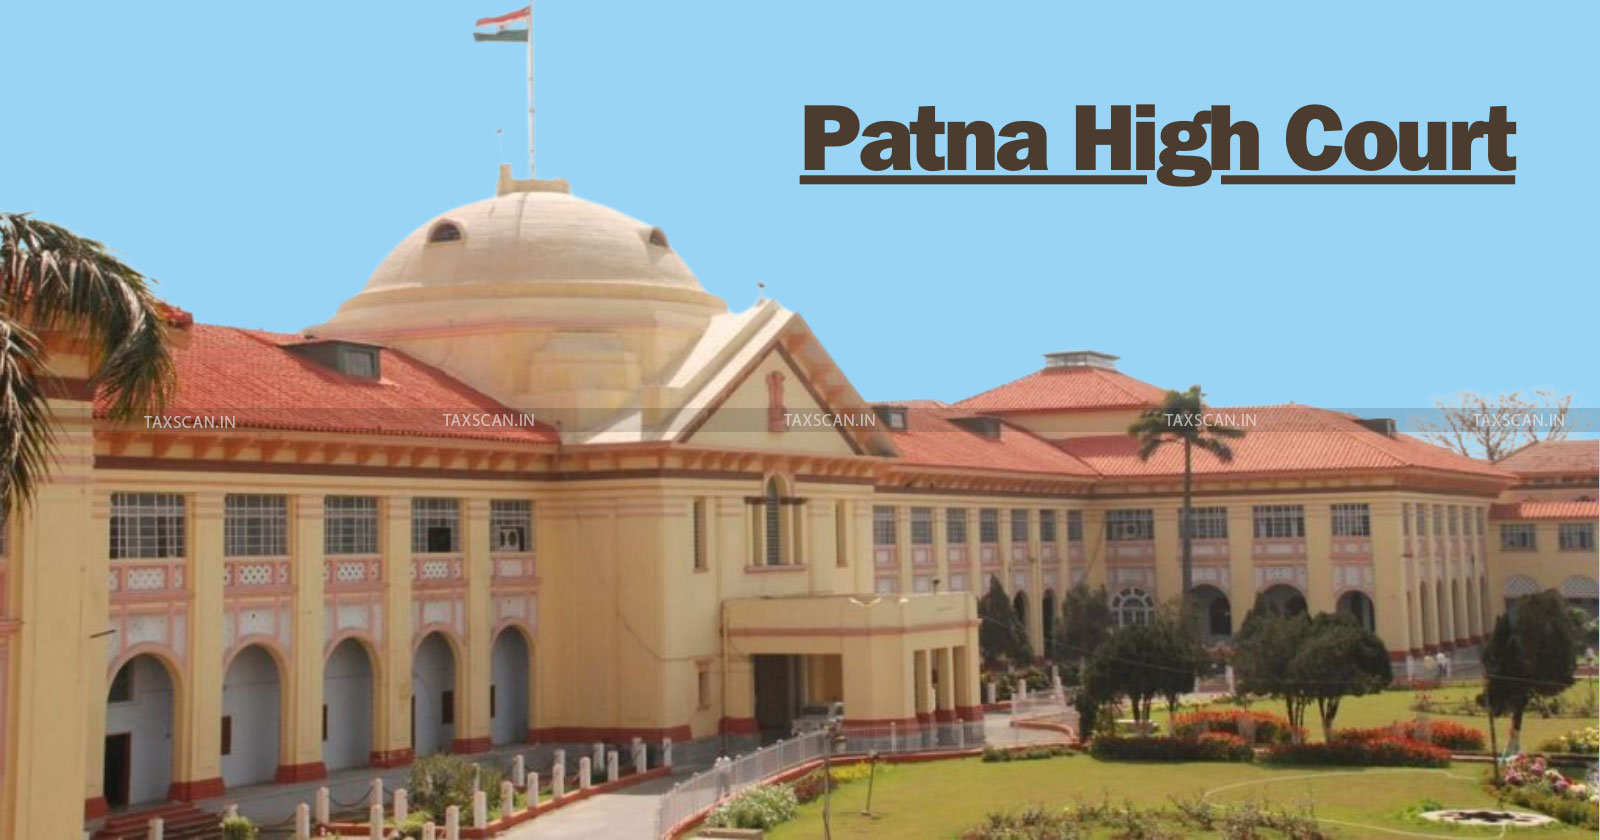 Patna High Court - Notice Inviting Tender - Chartered Accountant - Non empanelment CA firm - taxscan